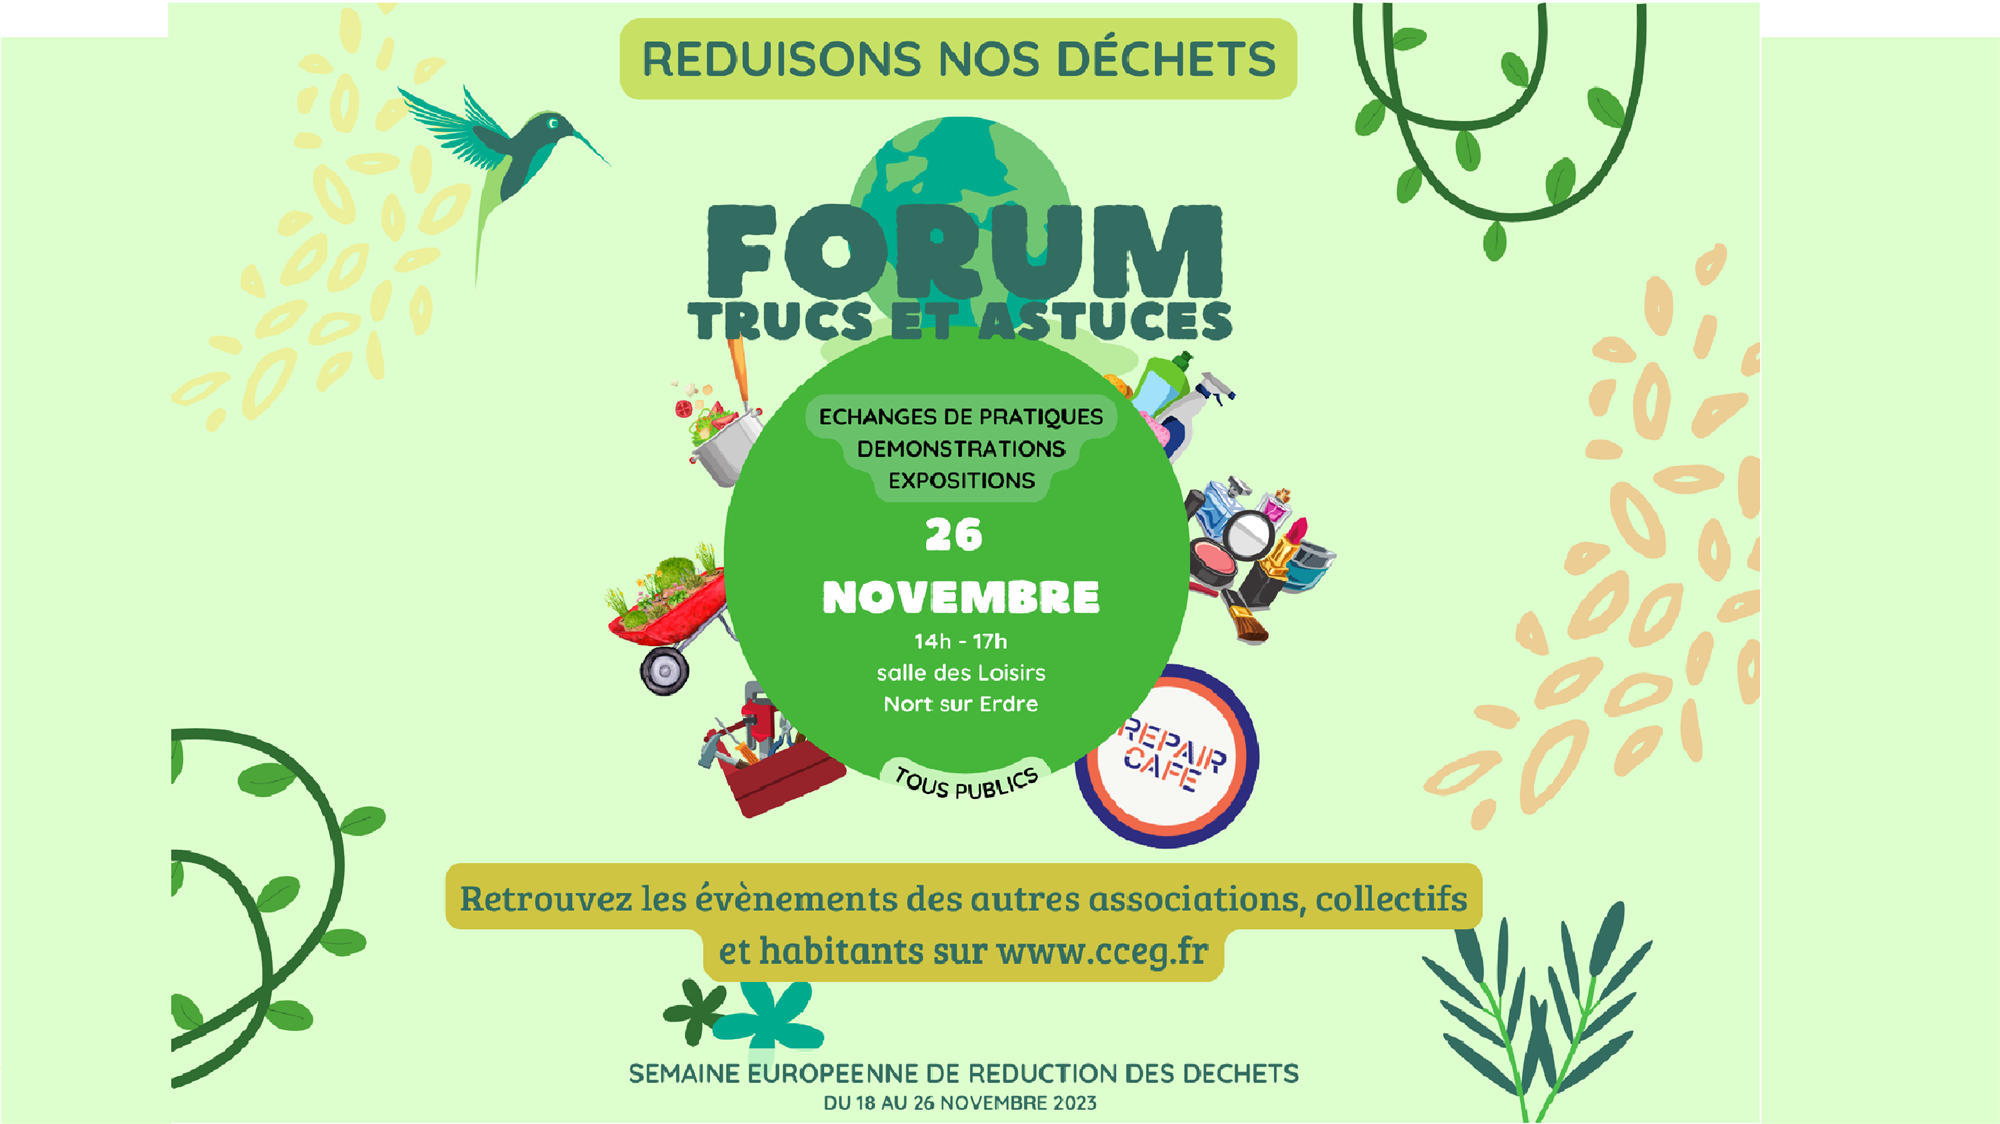 Forum trucs et astuces © Comité Initiatives Locales Erdre et Gesvres